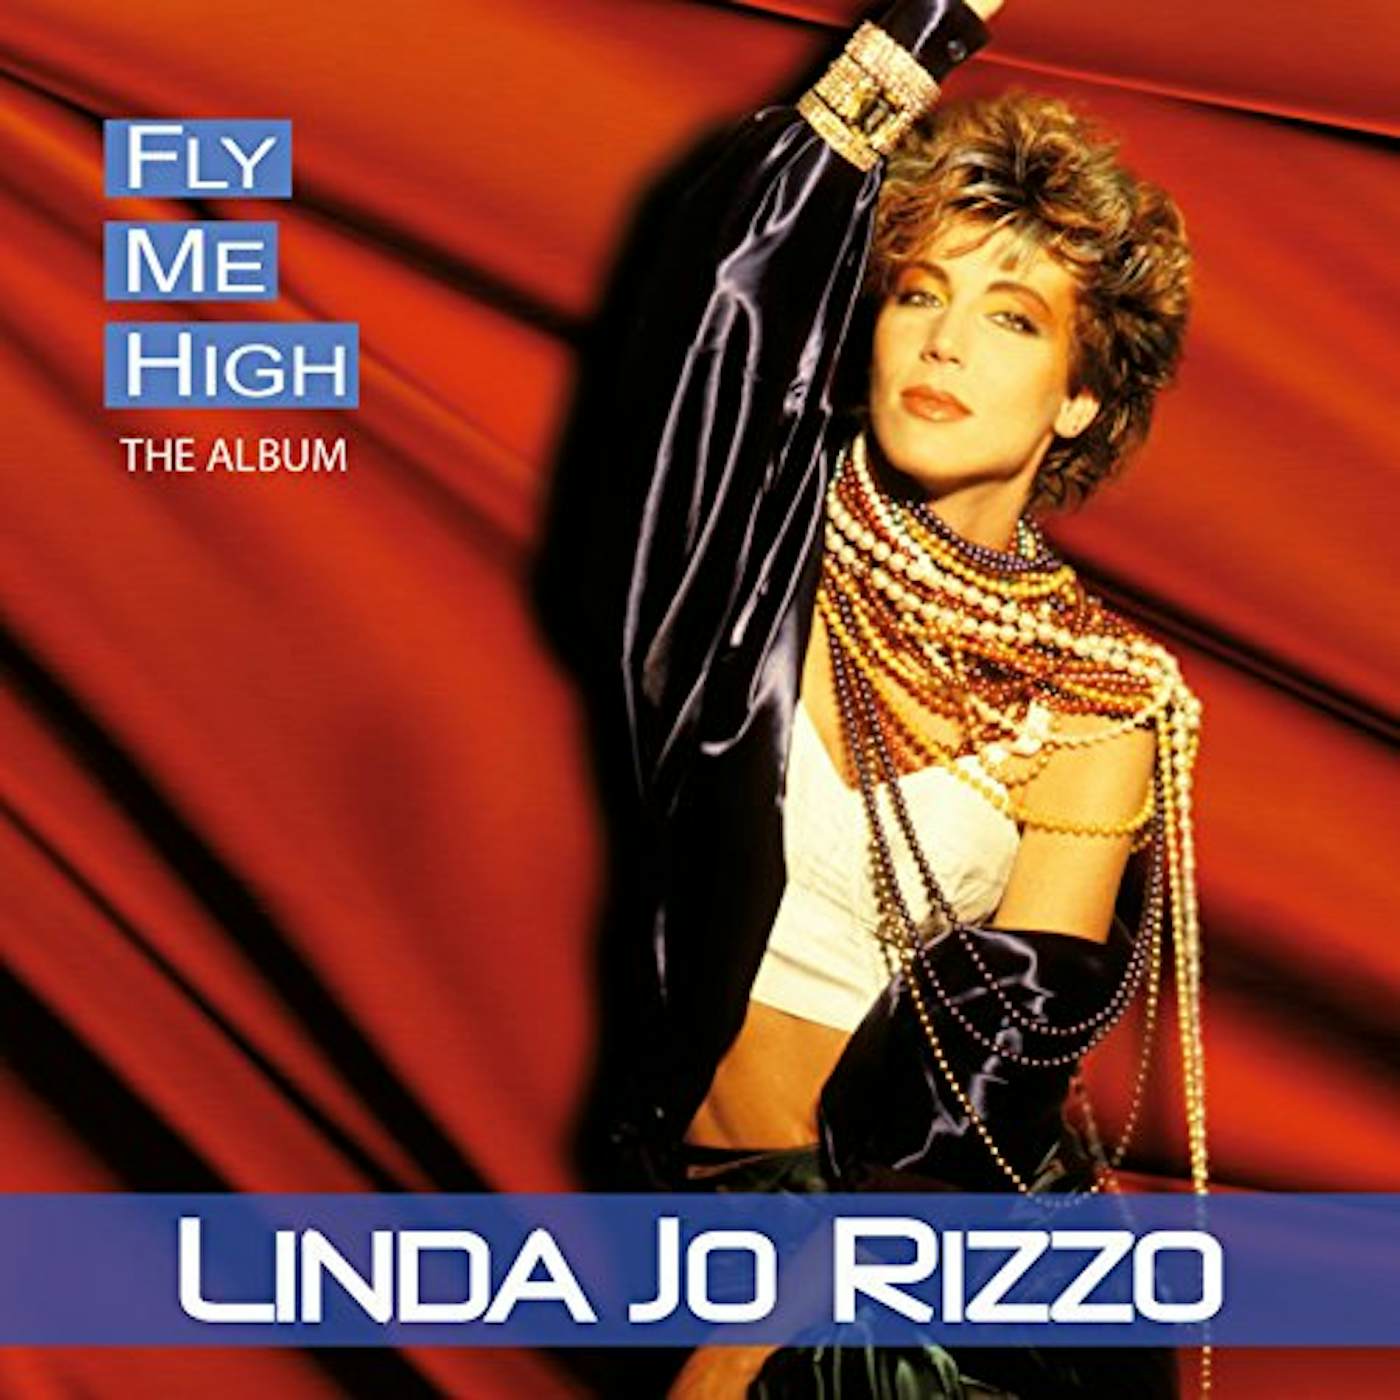 Linda Jo Rizzo FLY ME HIGH CD